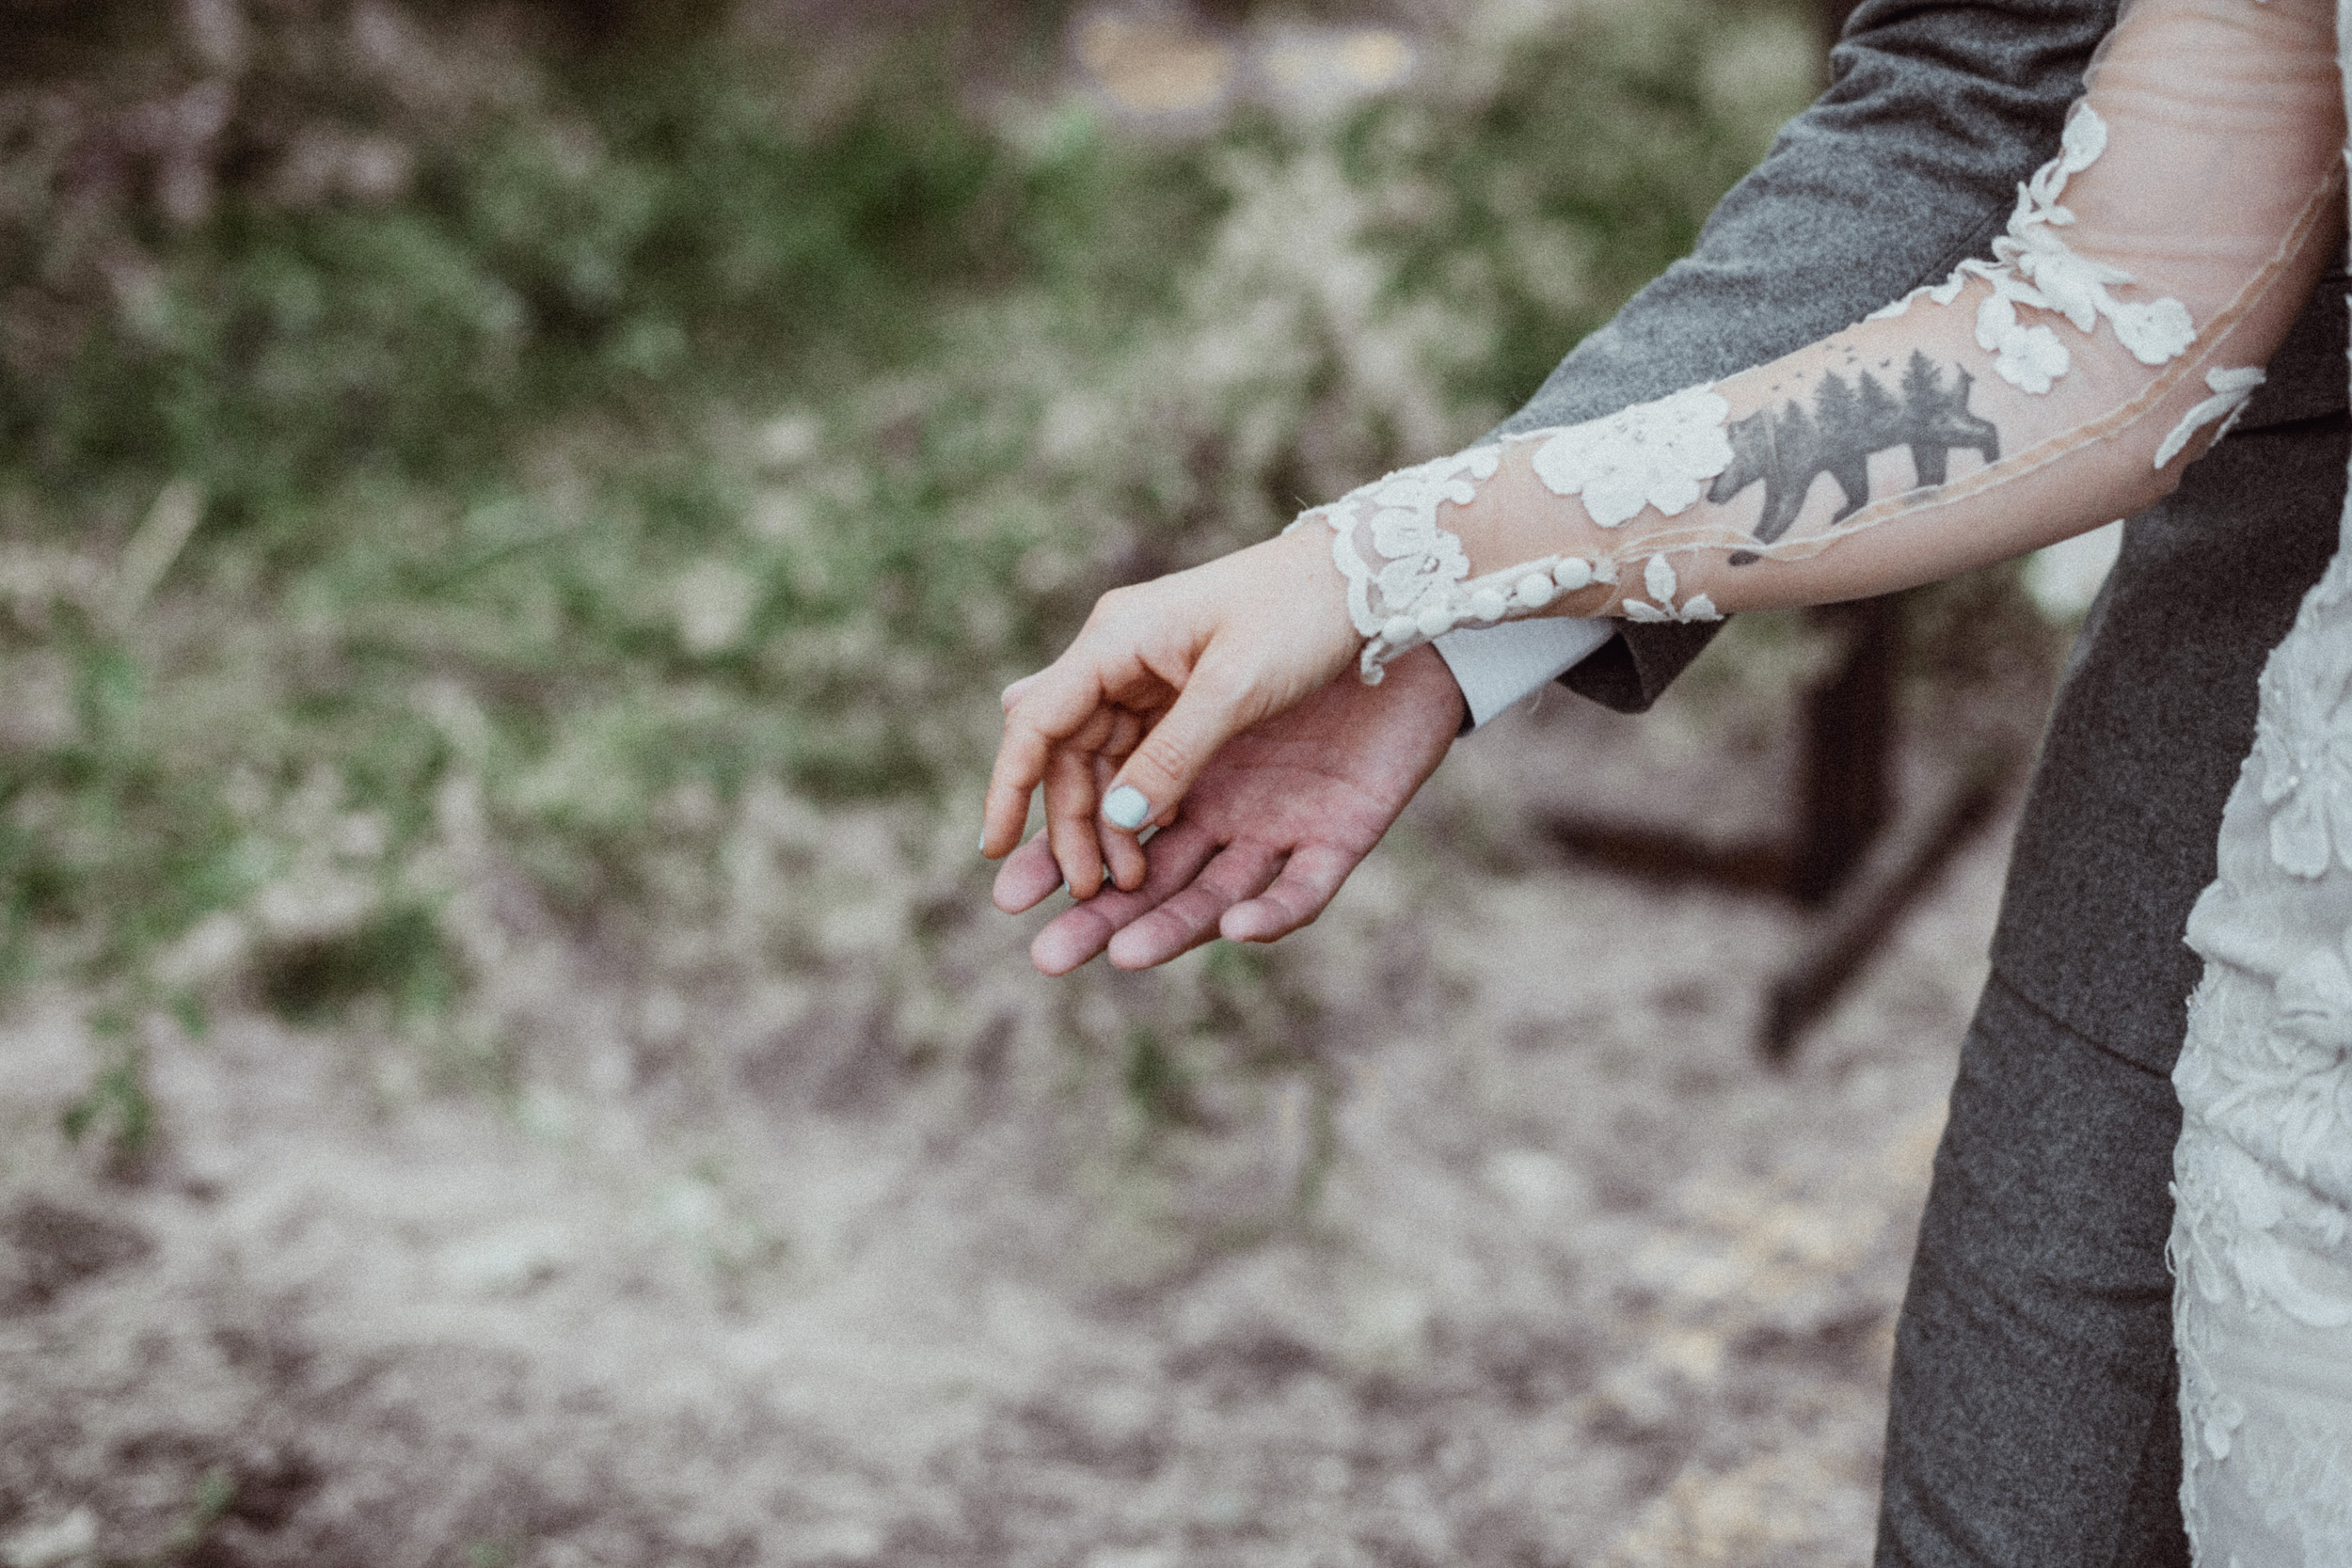 Lace wedding dress bear tattoo on forearm